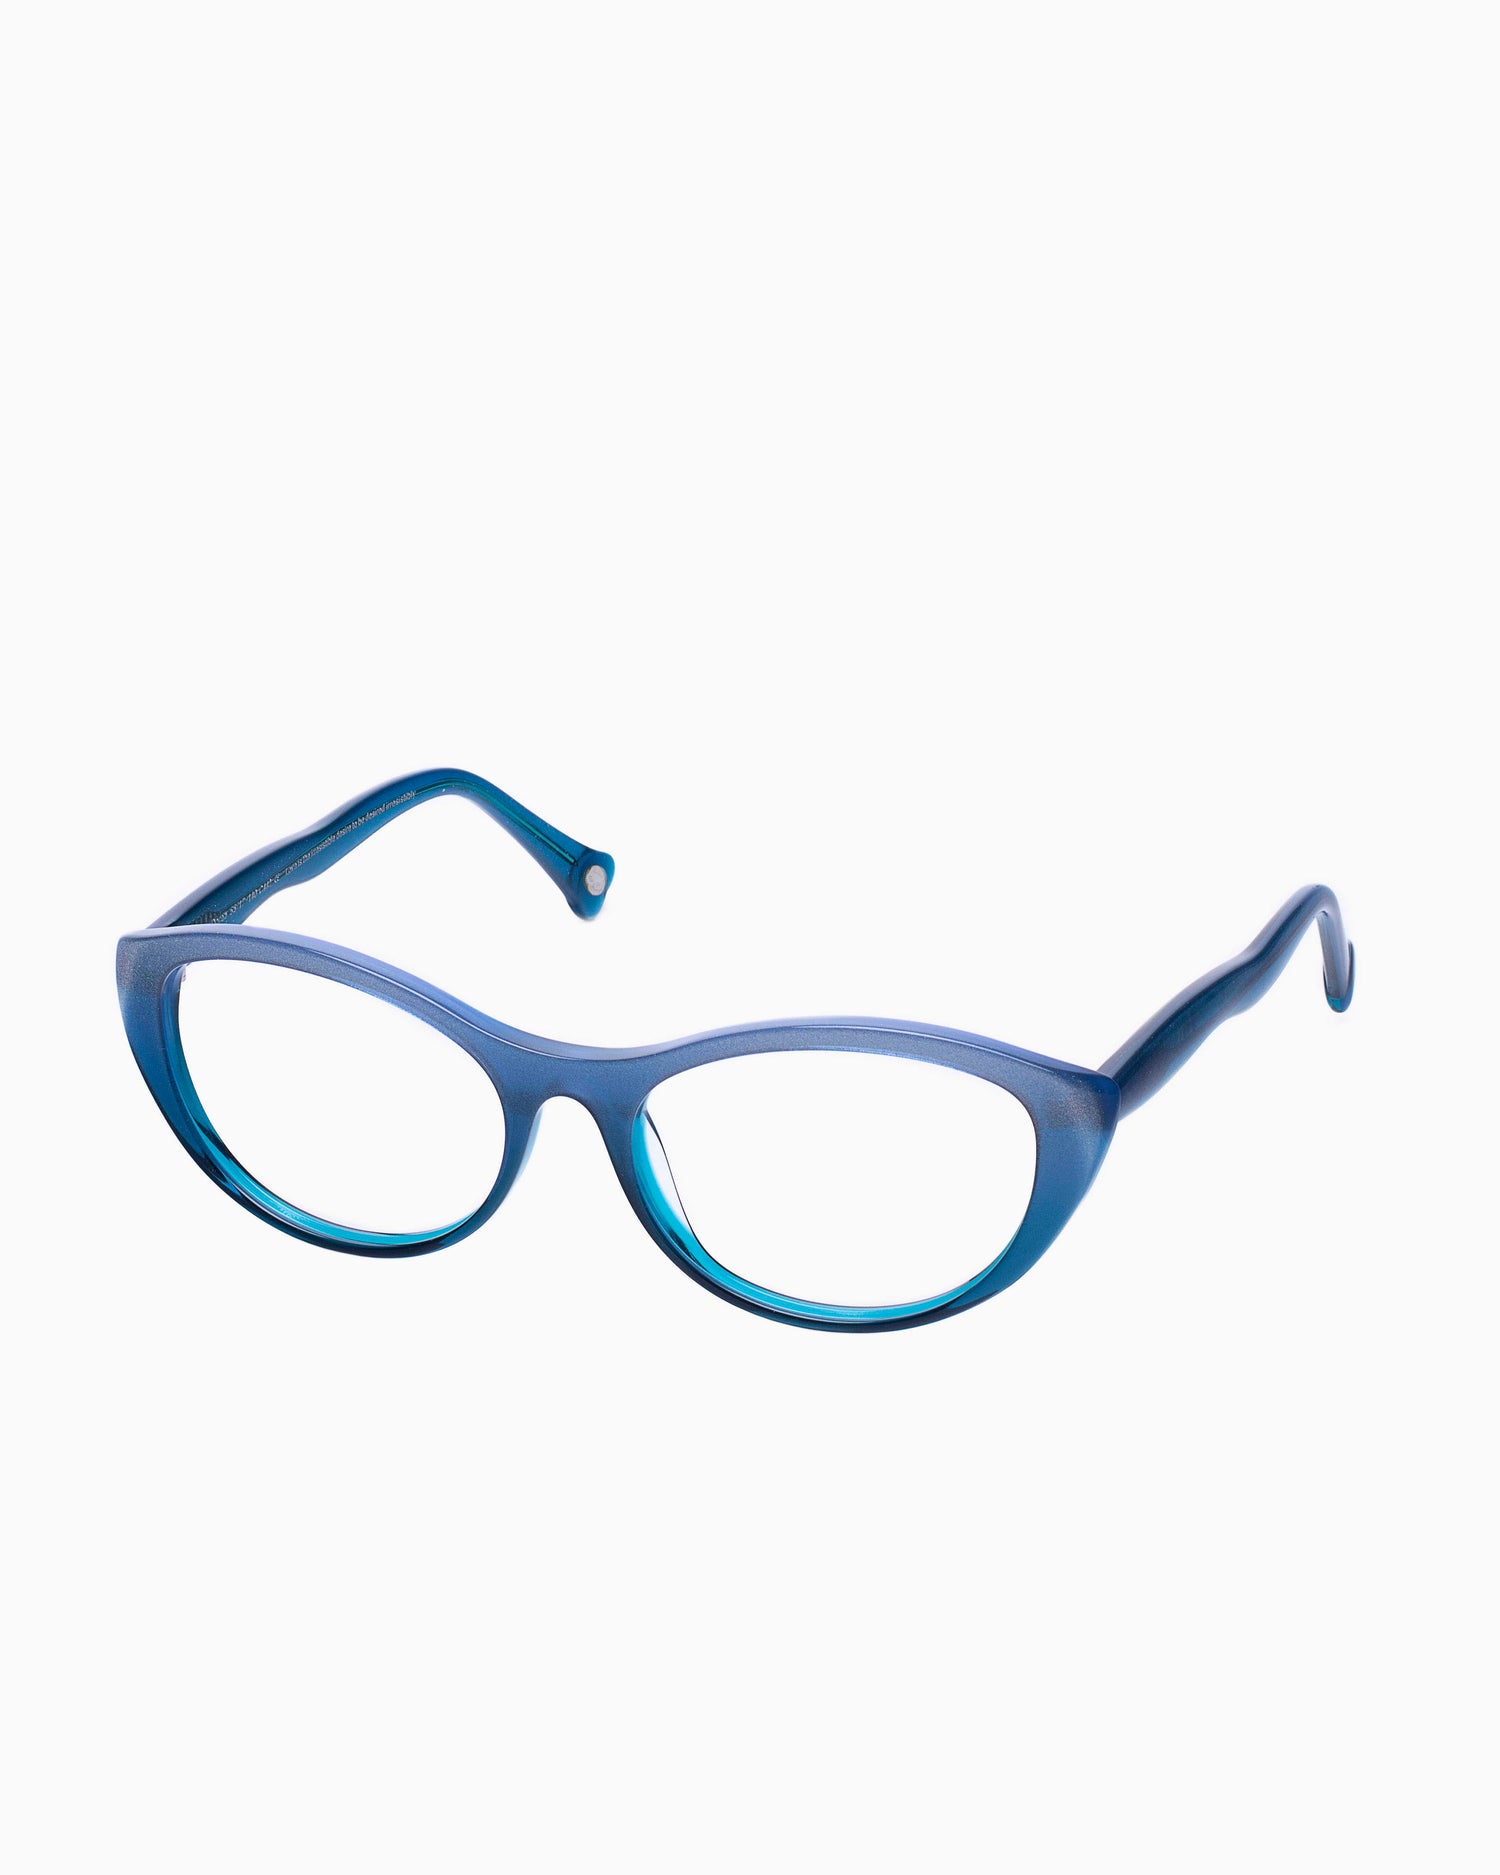 Spectacleeyeworks - Doree - C442 | Bar à lunettes:  Marie-Sophie Dion